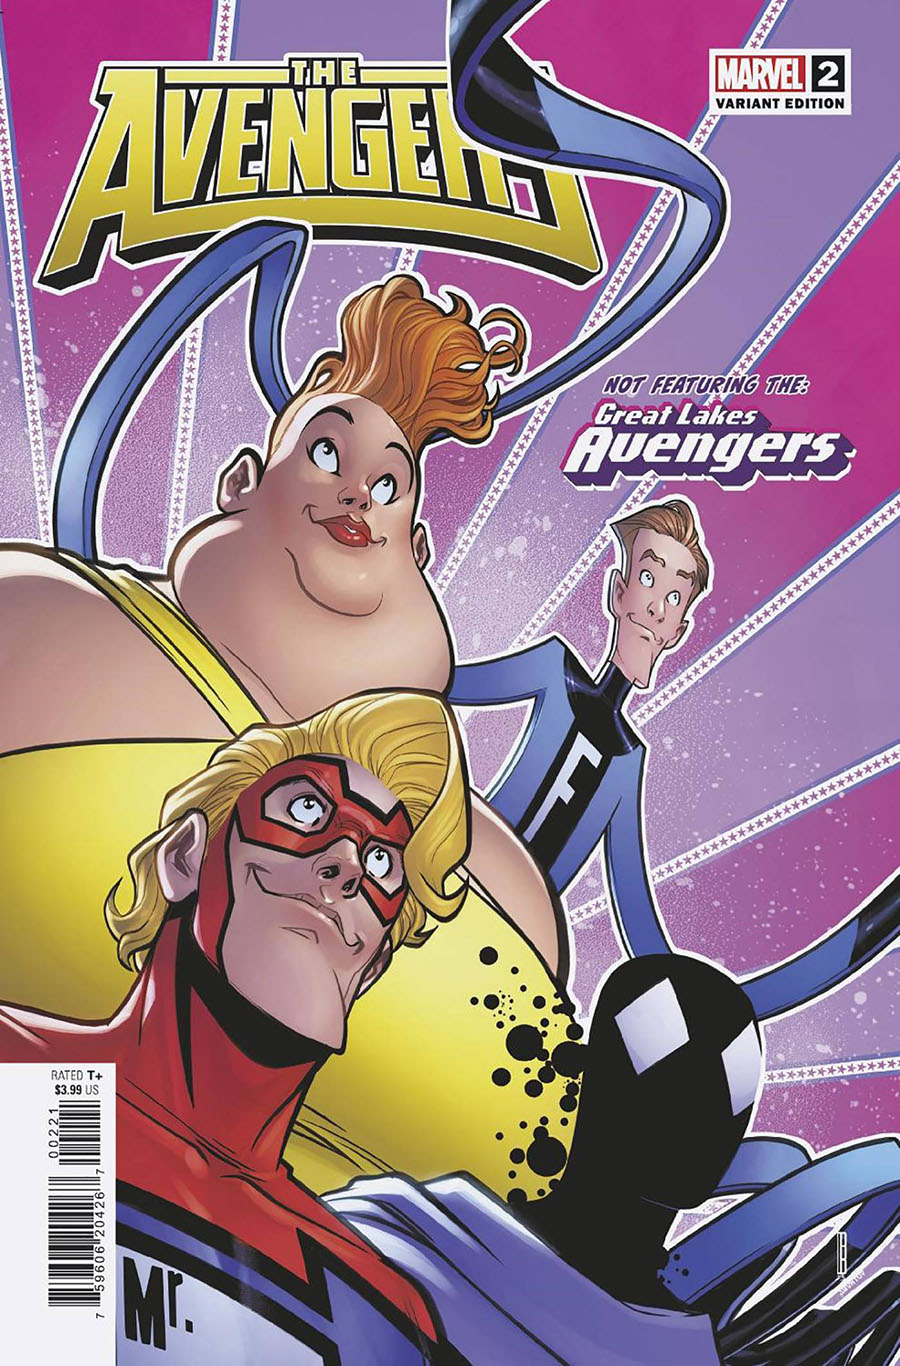 Avengers Vol 8 #2 Cover C Variant David Baldeon Great Lakes Avengers Cover